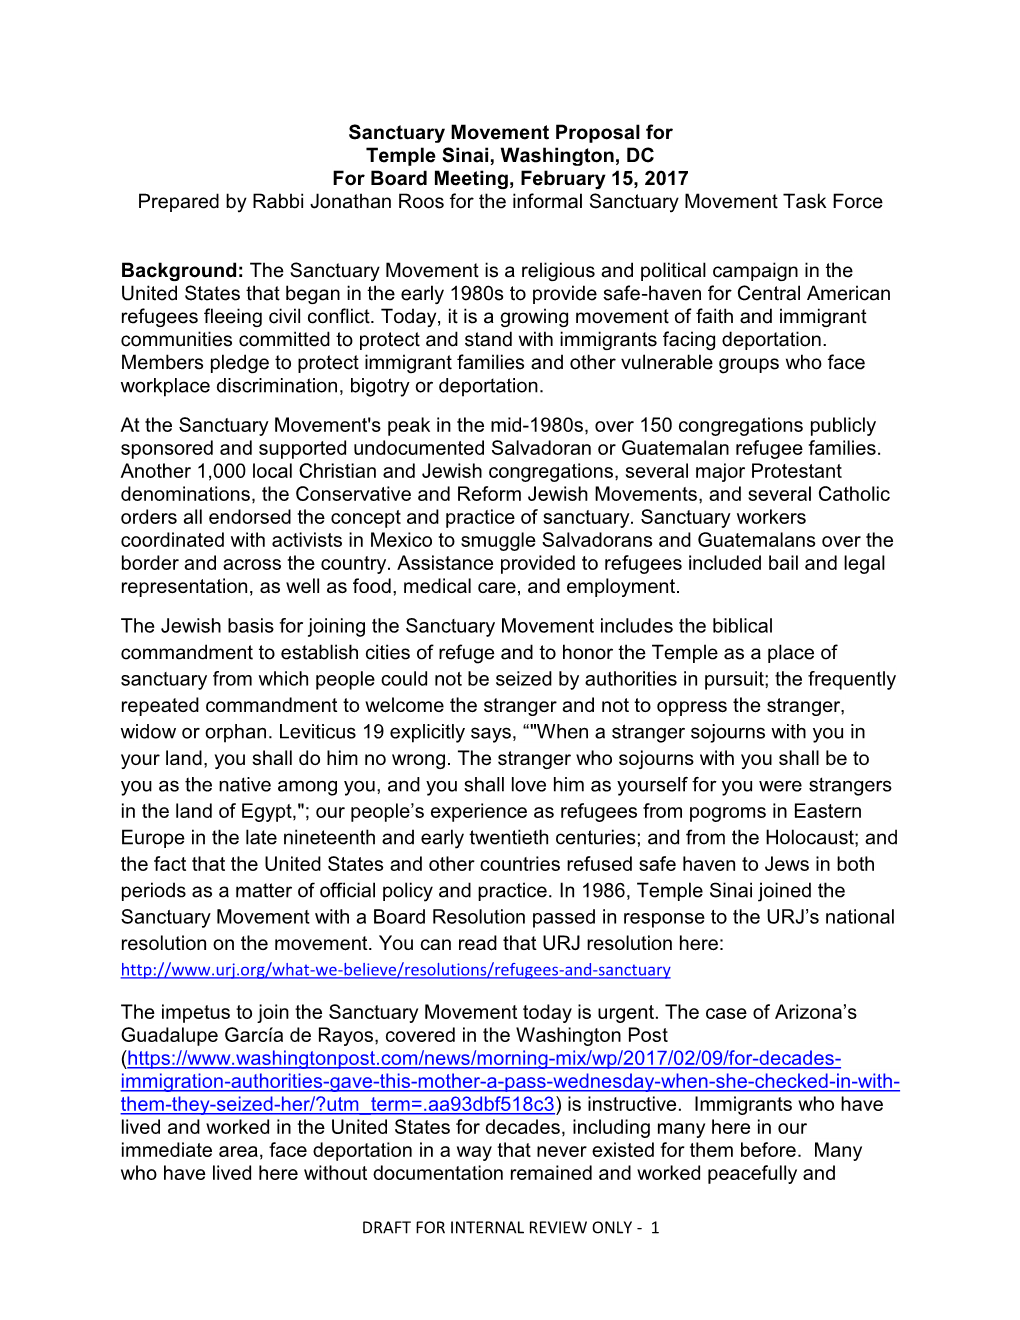 Sanctuary Movement Proposal for Temple Sinai, Washington, DC For